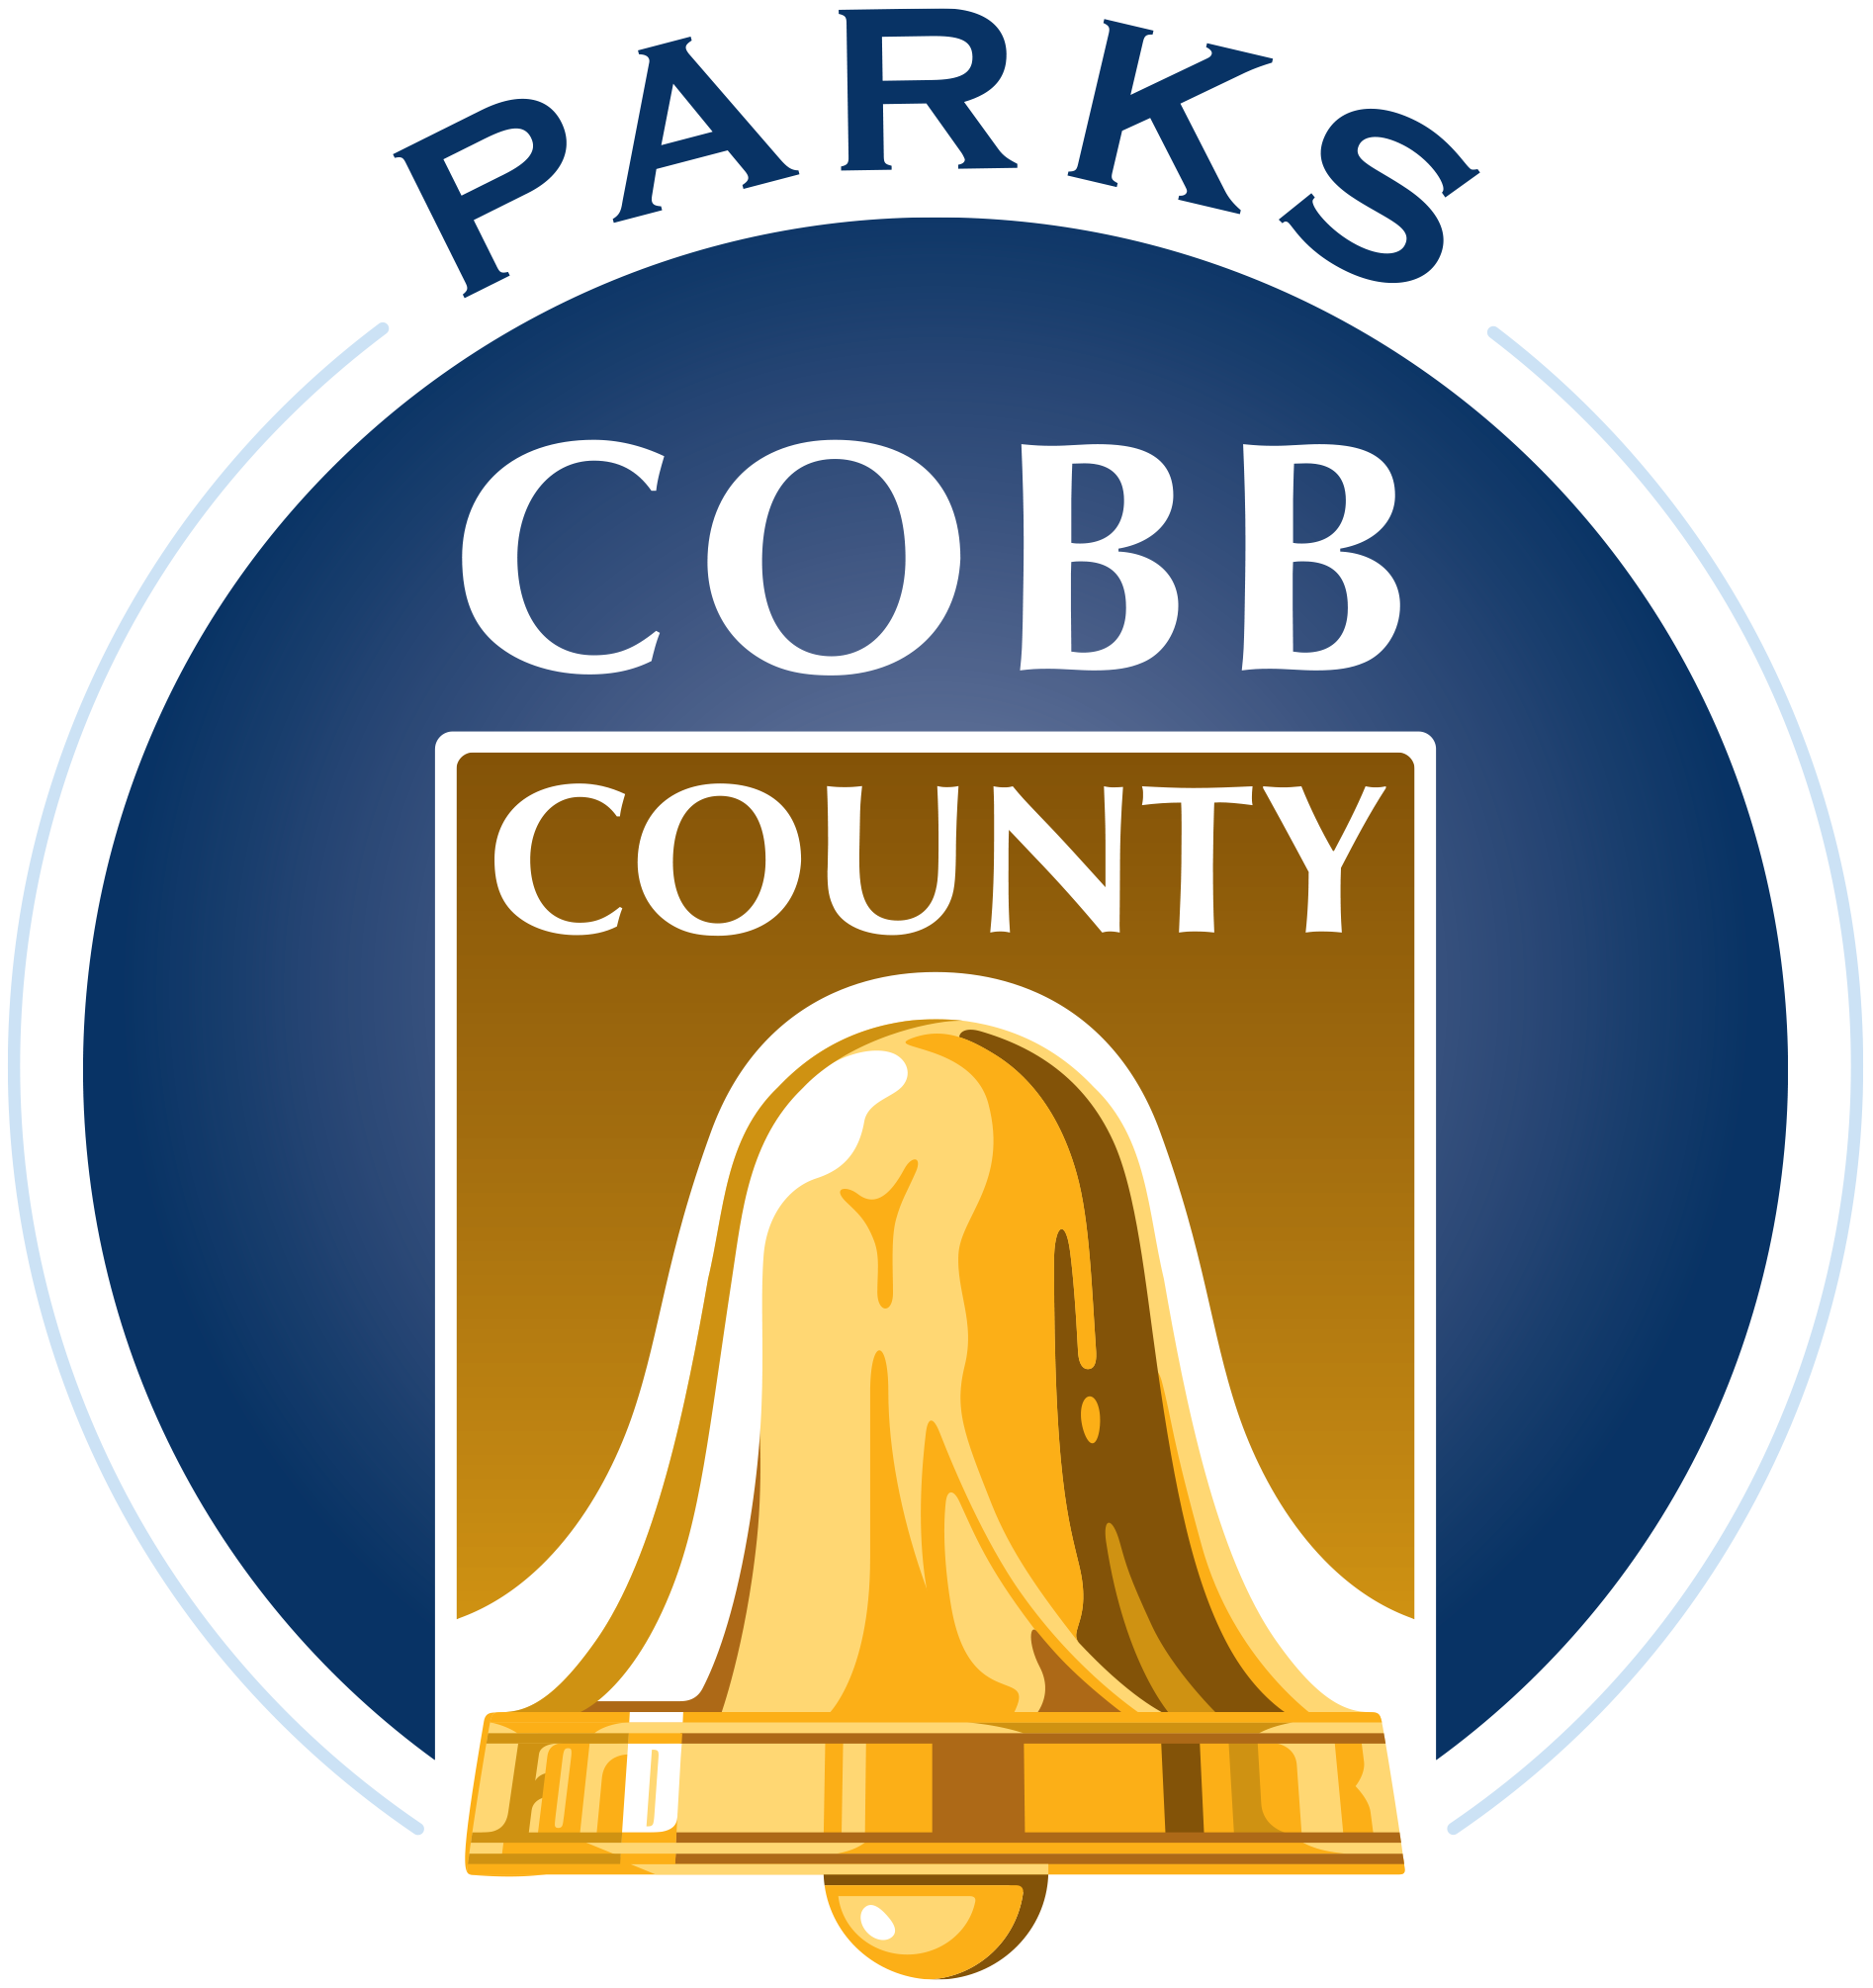 Cobb County PARKS - Jennie T. Anderson Theatre